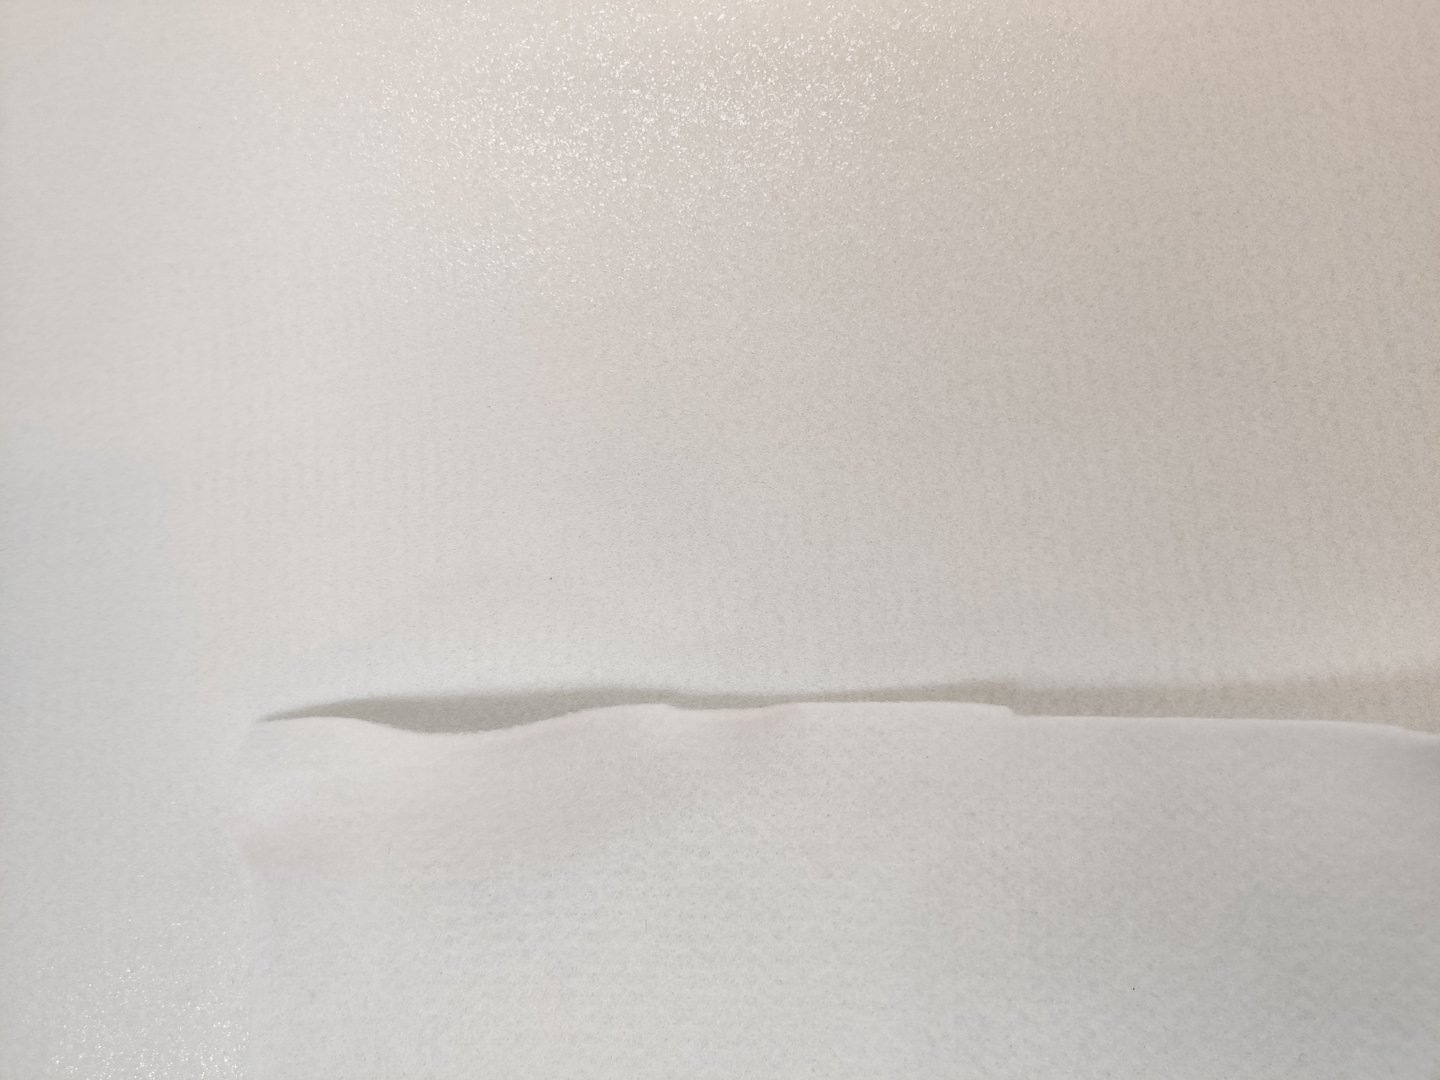 Glue-based potty pad felt